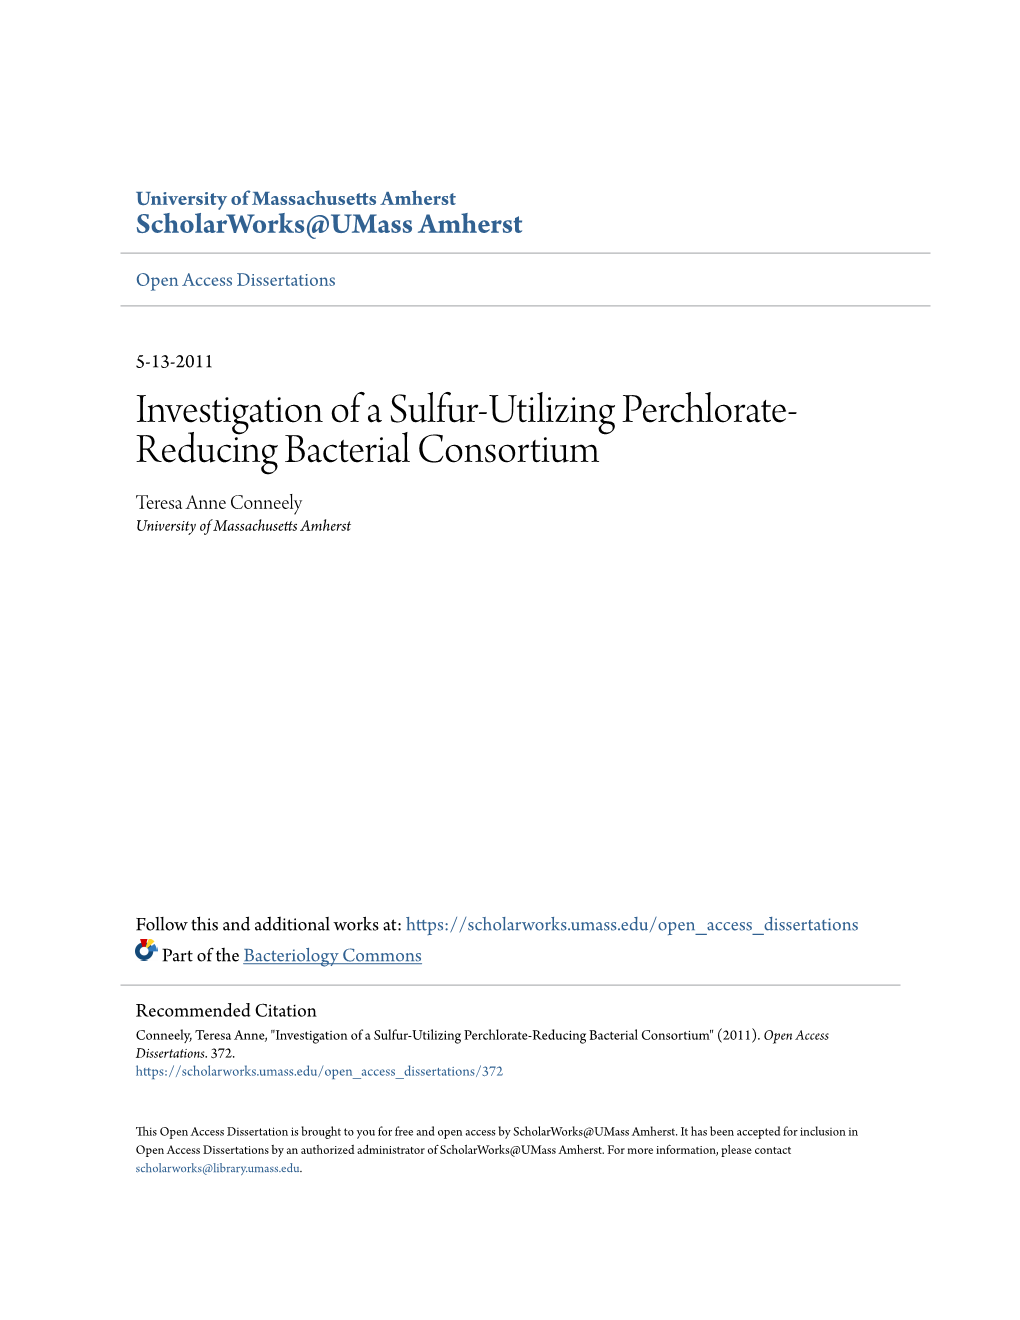 Investigation of a Sulfur-Utilizing Perchlorate-Reducing Bacterial Consortium" (2011)